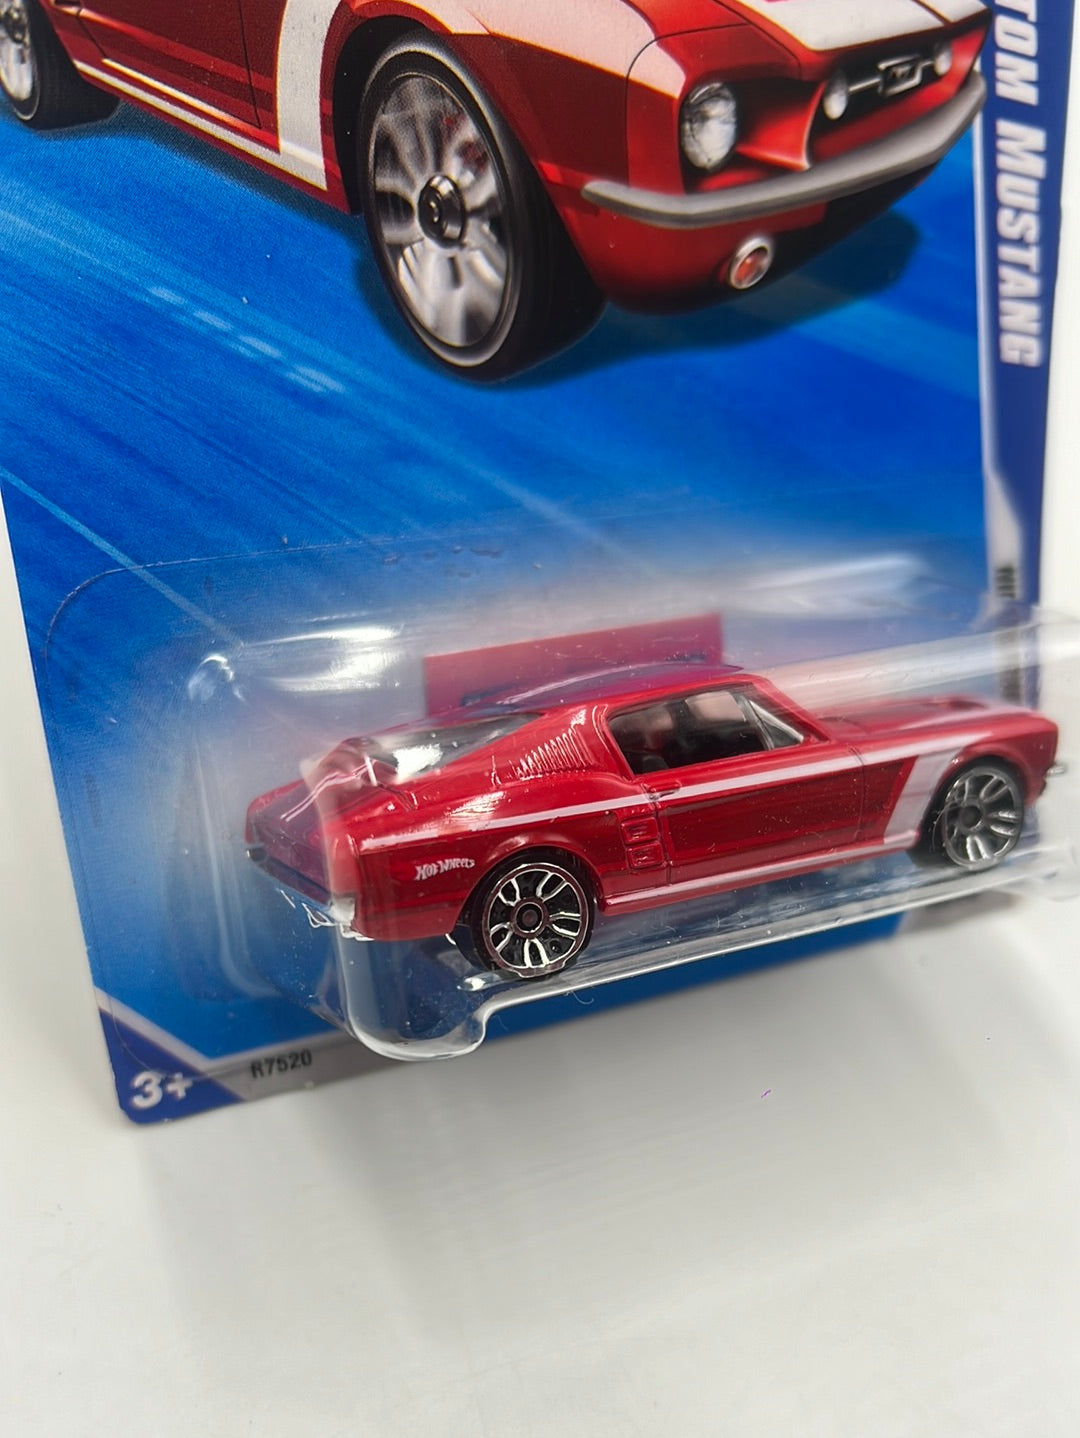 2010 Hot Wheels Nightburnerz ‘67 Custom Mustang Red Keys to Speed 95/240 23G